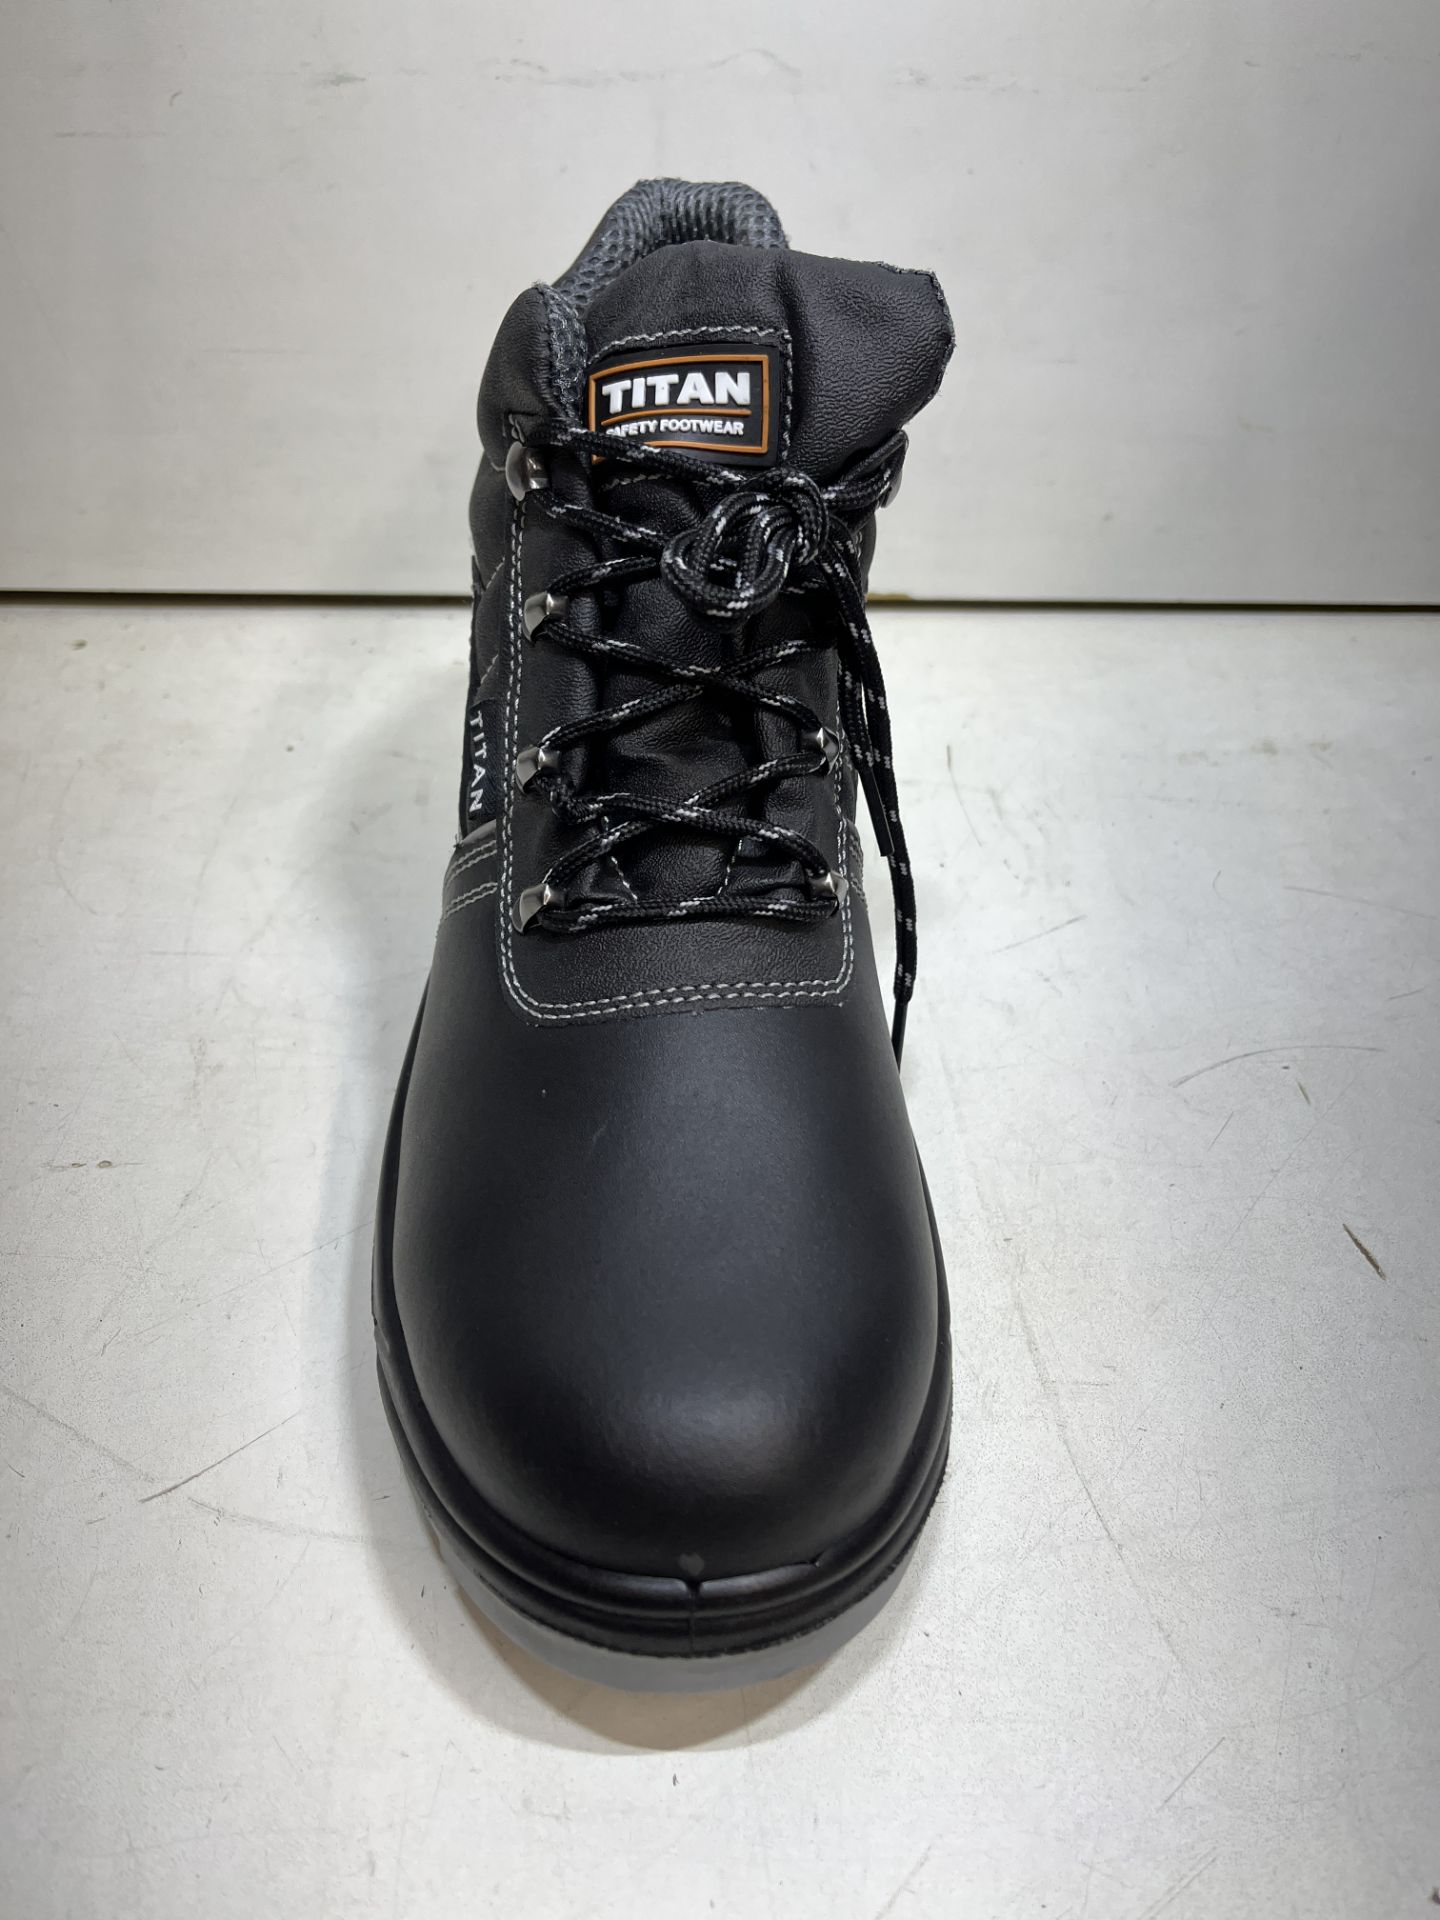 Titan Holton Black Steel Toe Cap Safety Boots | UK 10 - Image 3 of 4